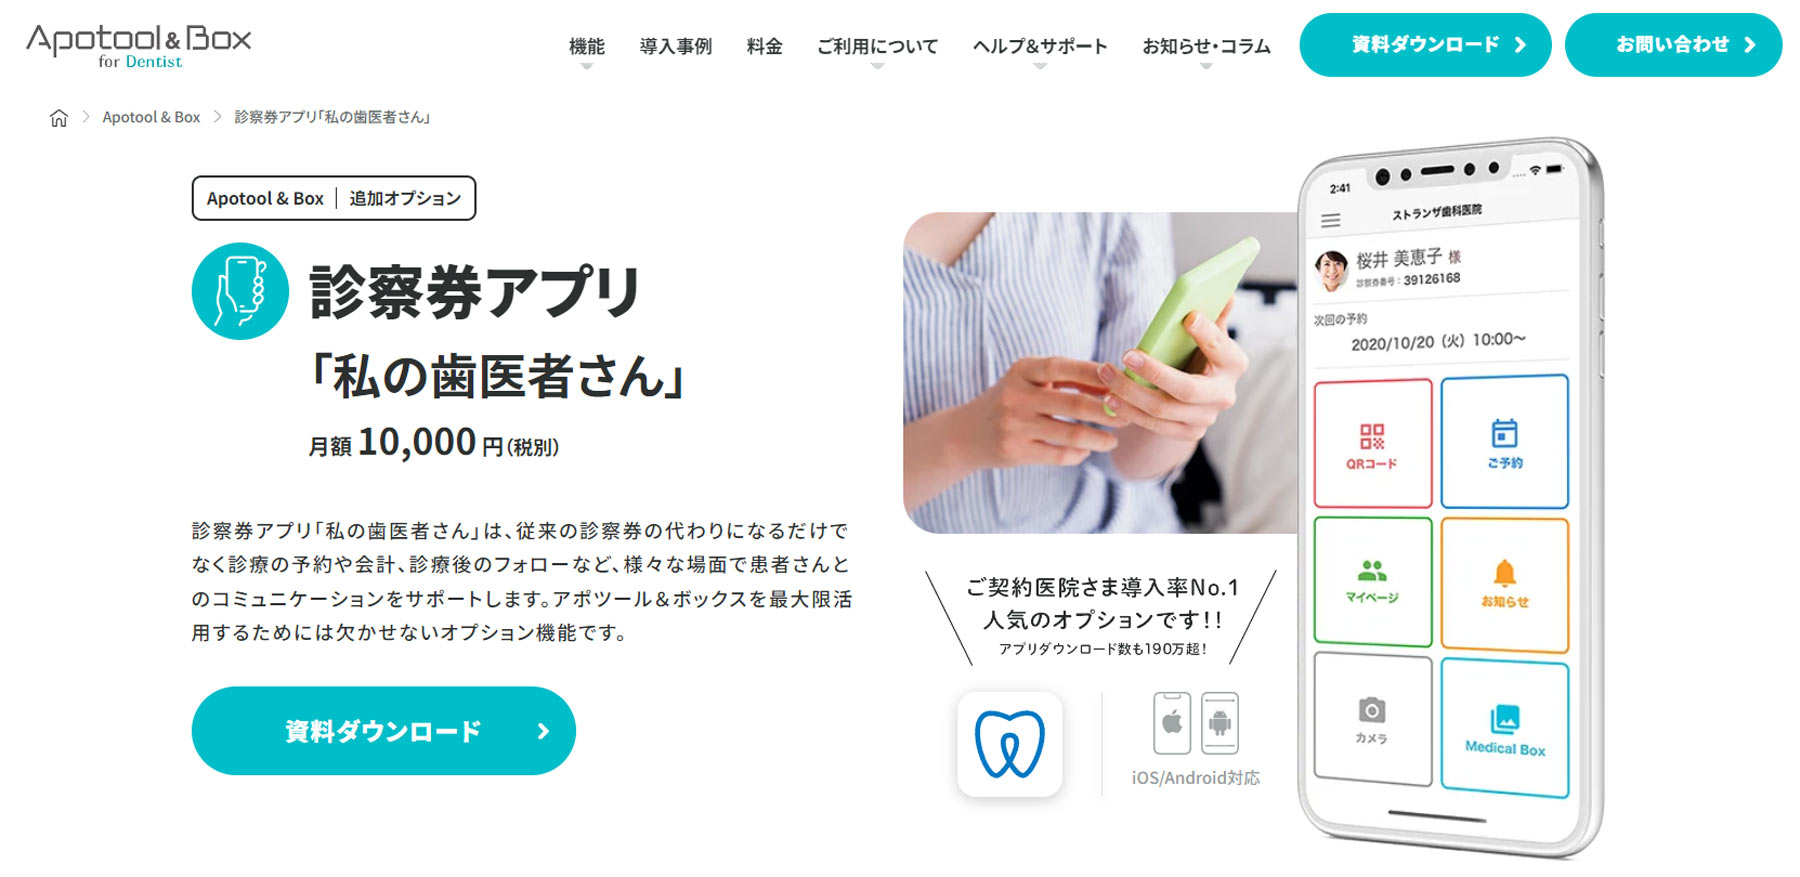 Apotool & Box for Dentist公式Webサイト